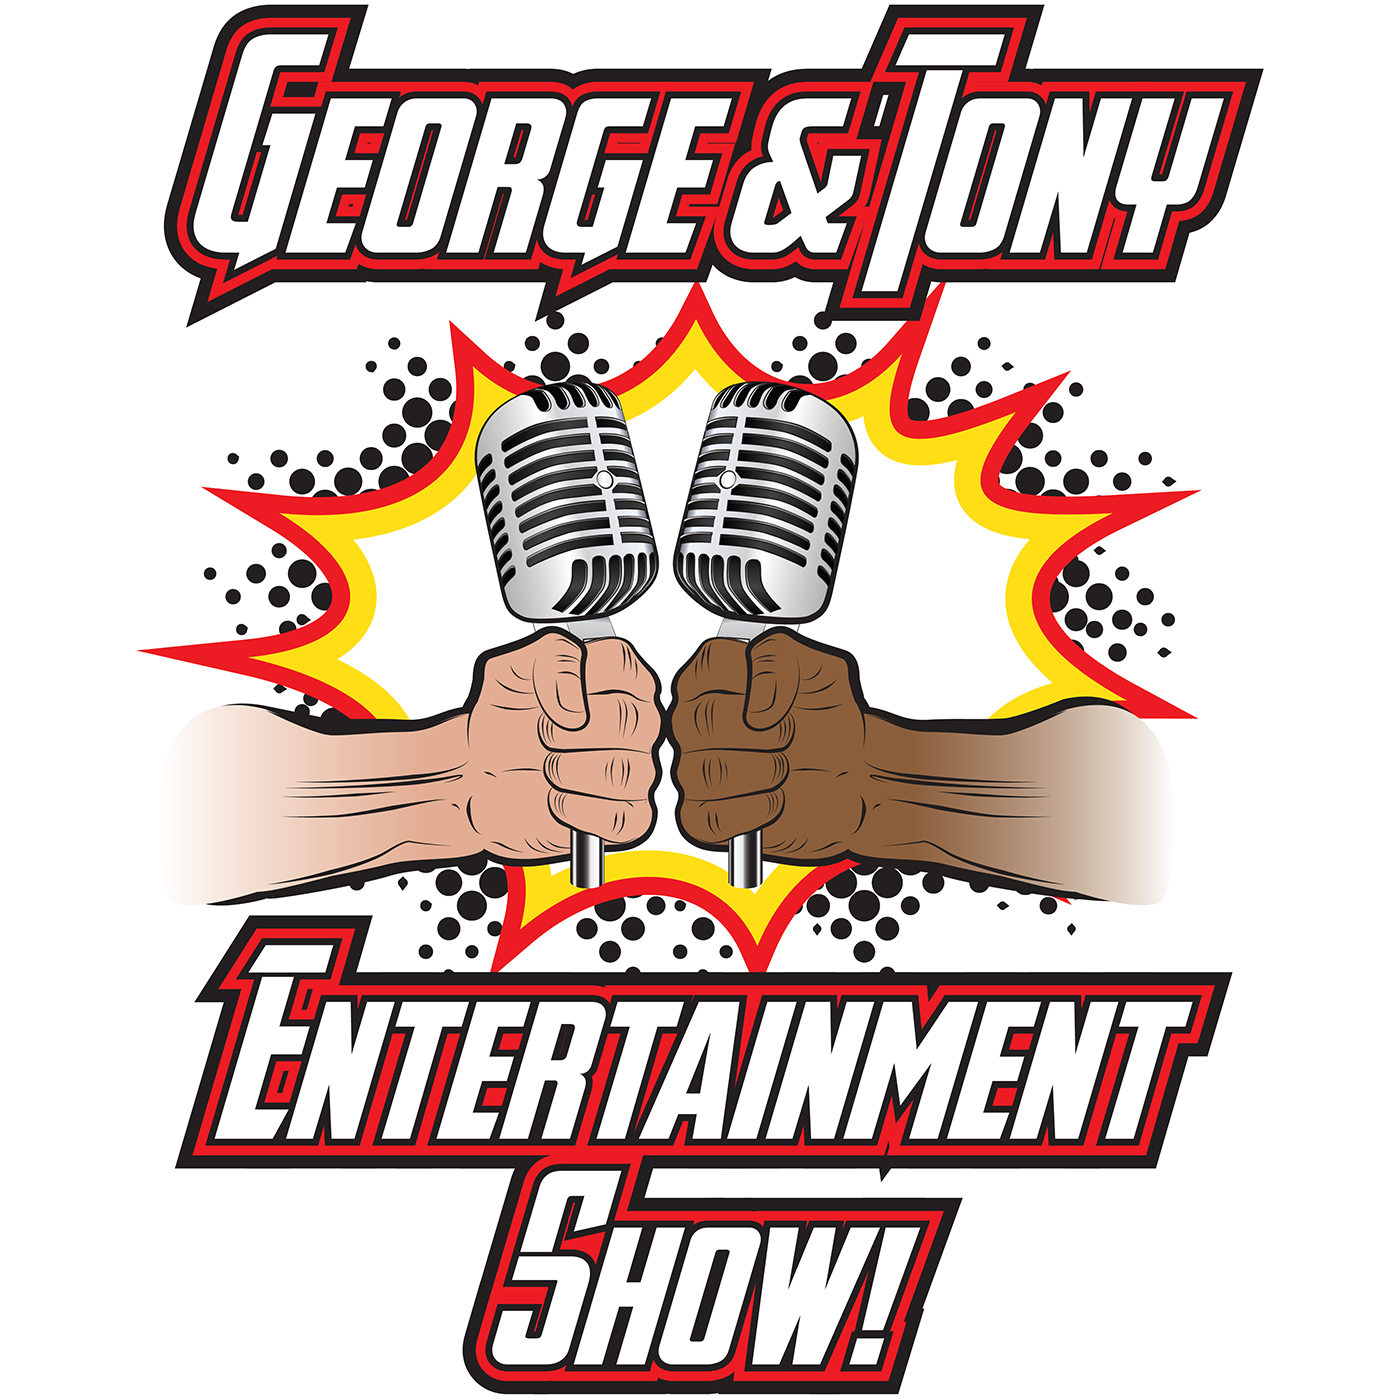 George and Tony Entertainment Show, Andelman.com